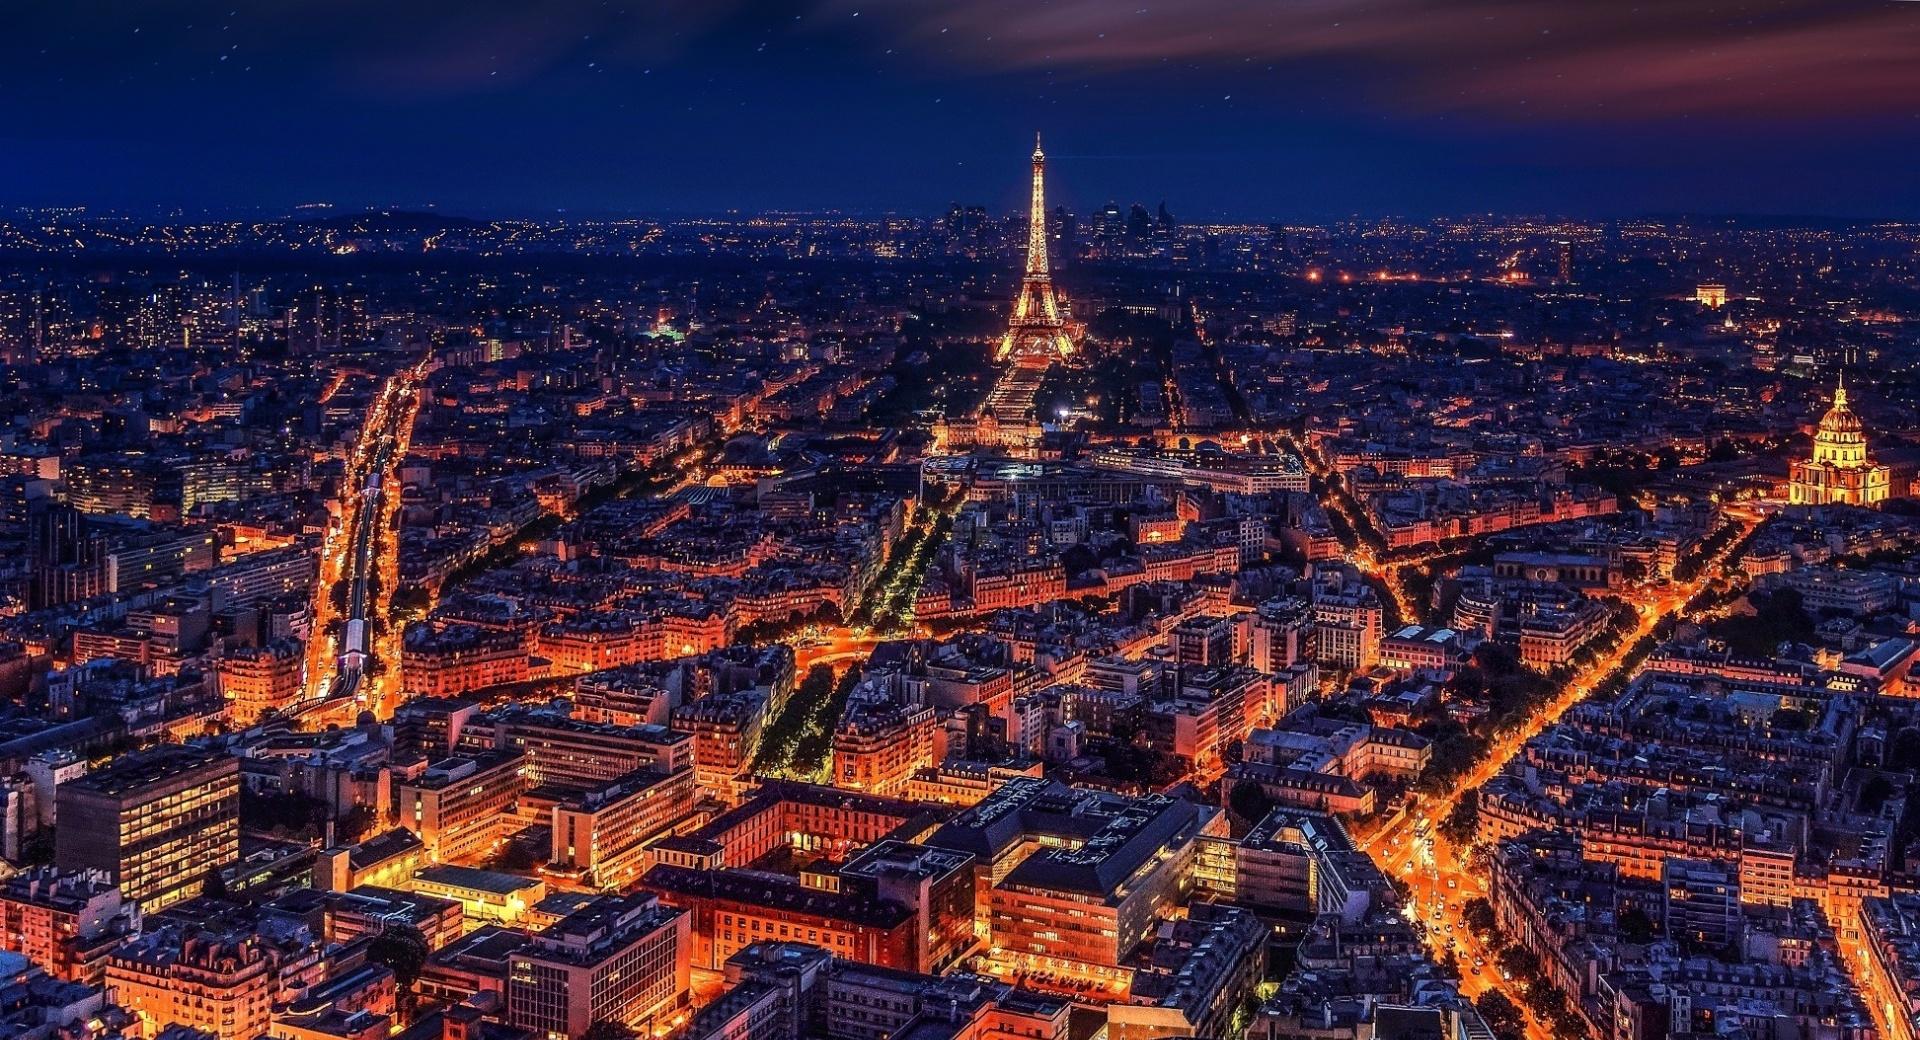 Paris at Night at 1024 x 1024 iPad size wallpapers HD quality